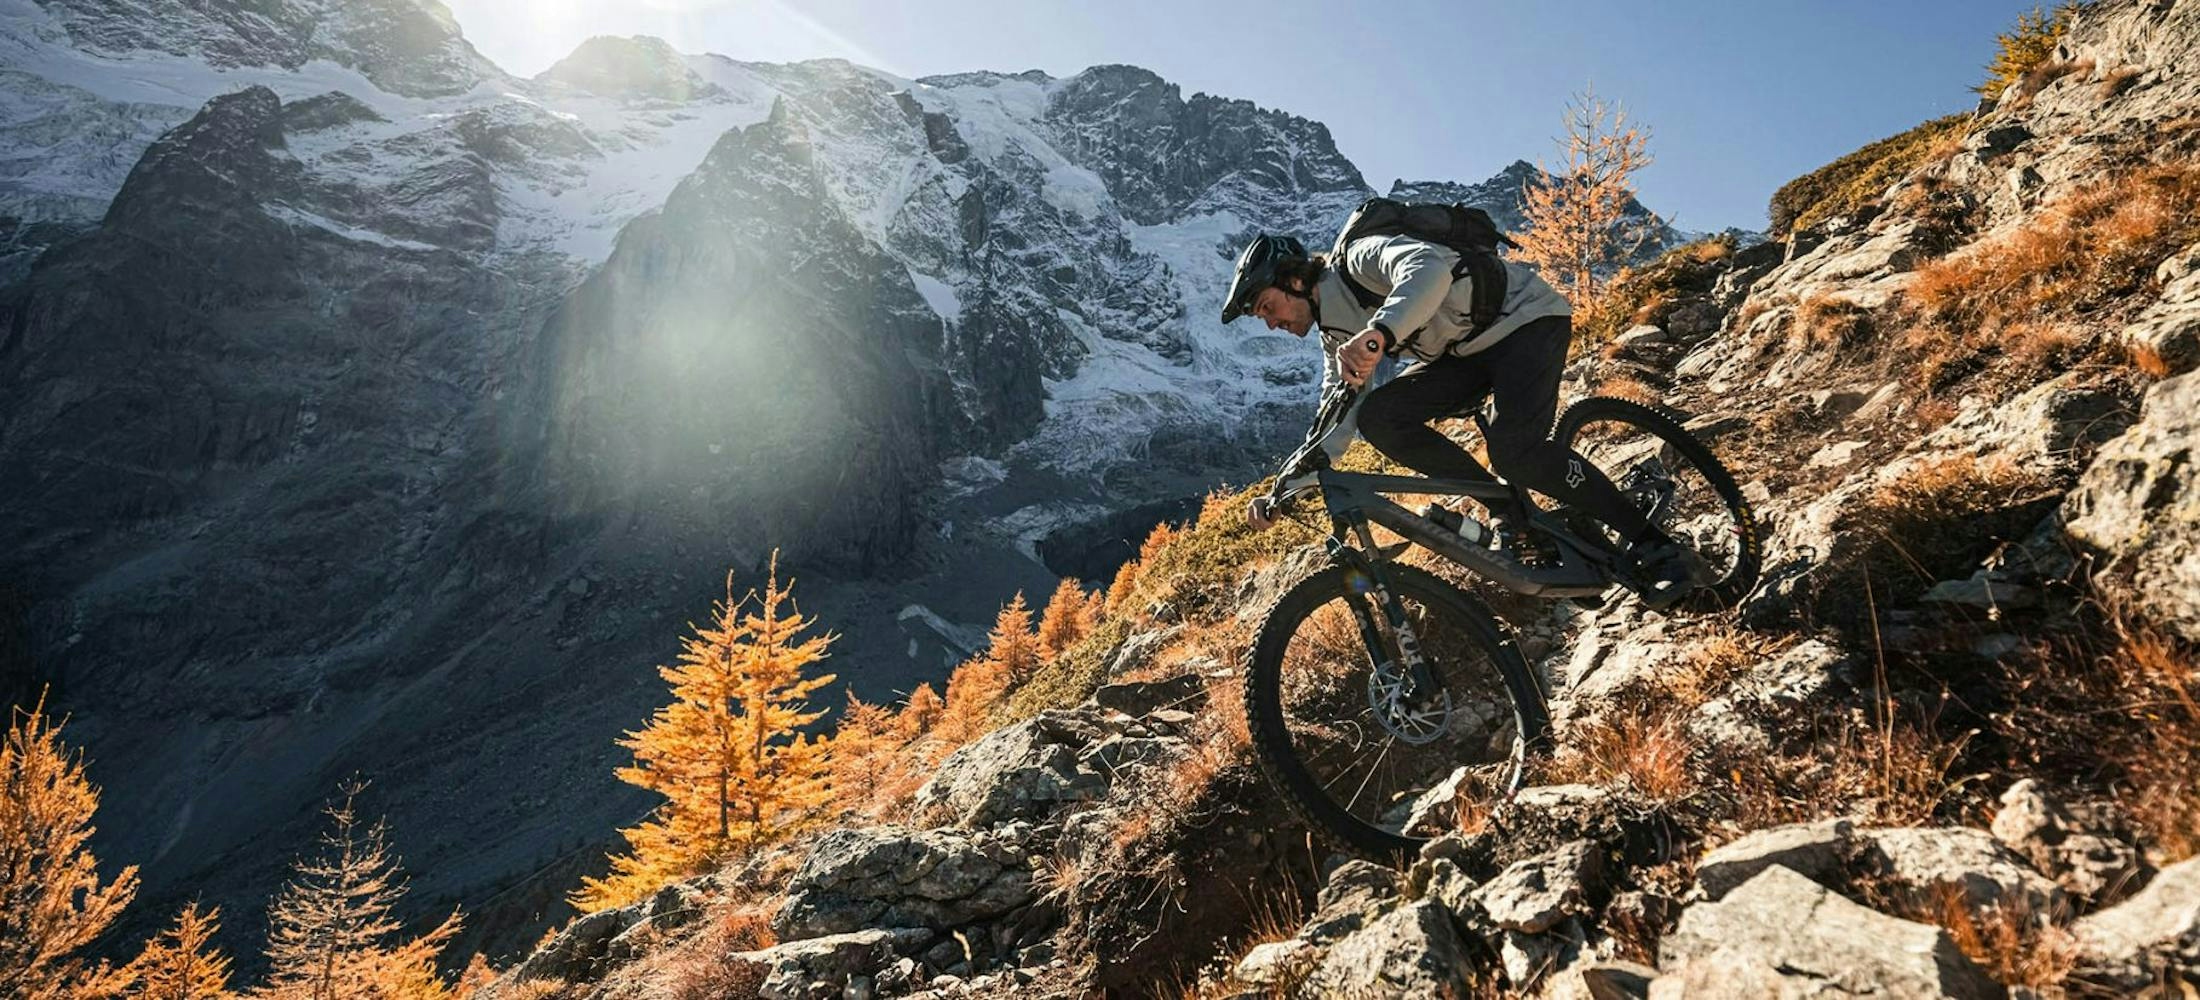 Loic D, riding his Santa Cruz mountain bike down a rock trail 